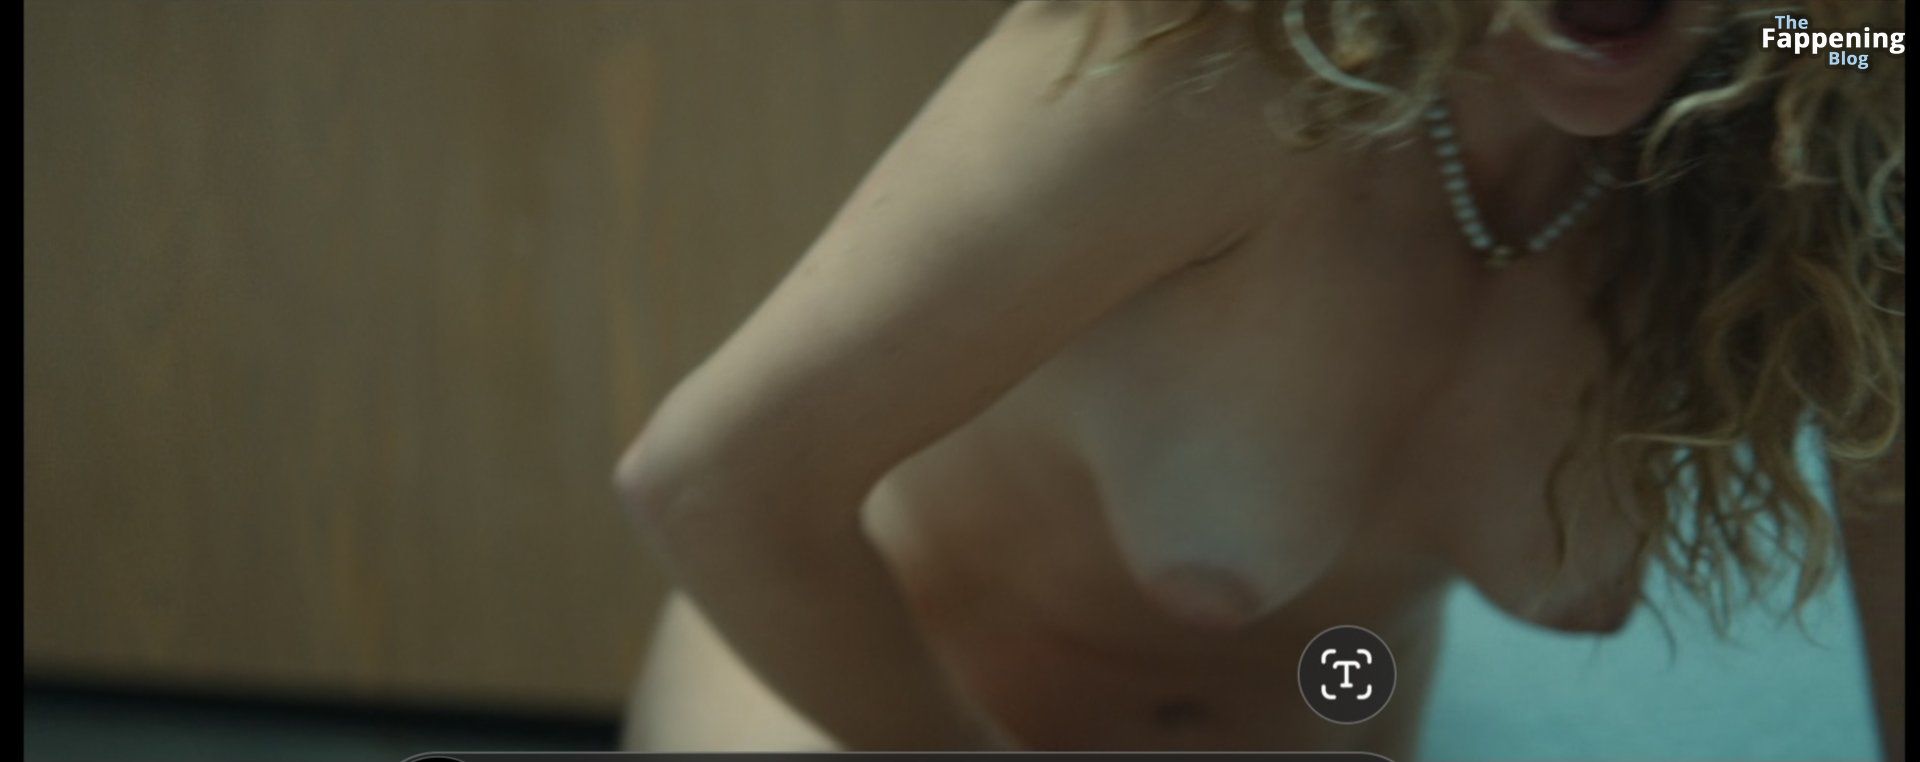 Shailene-Woodley-Nude-8-The-Fappening-Blog.jpg